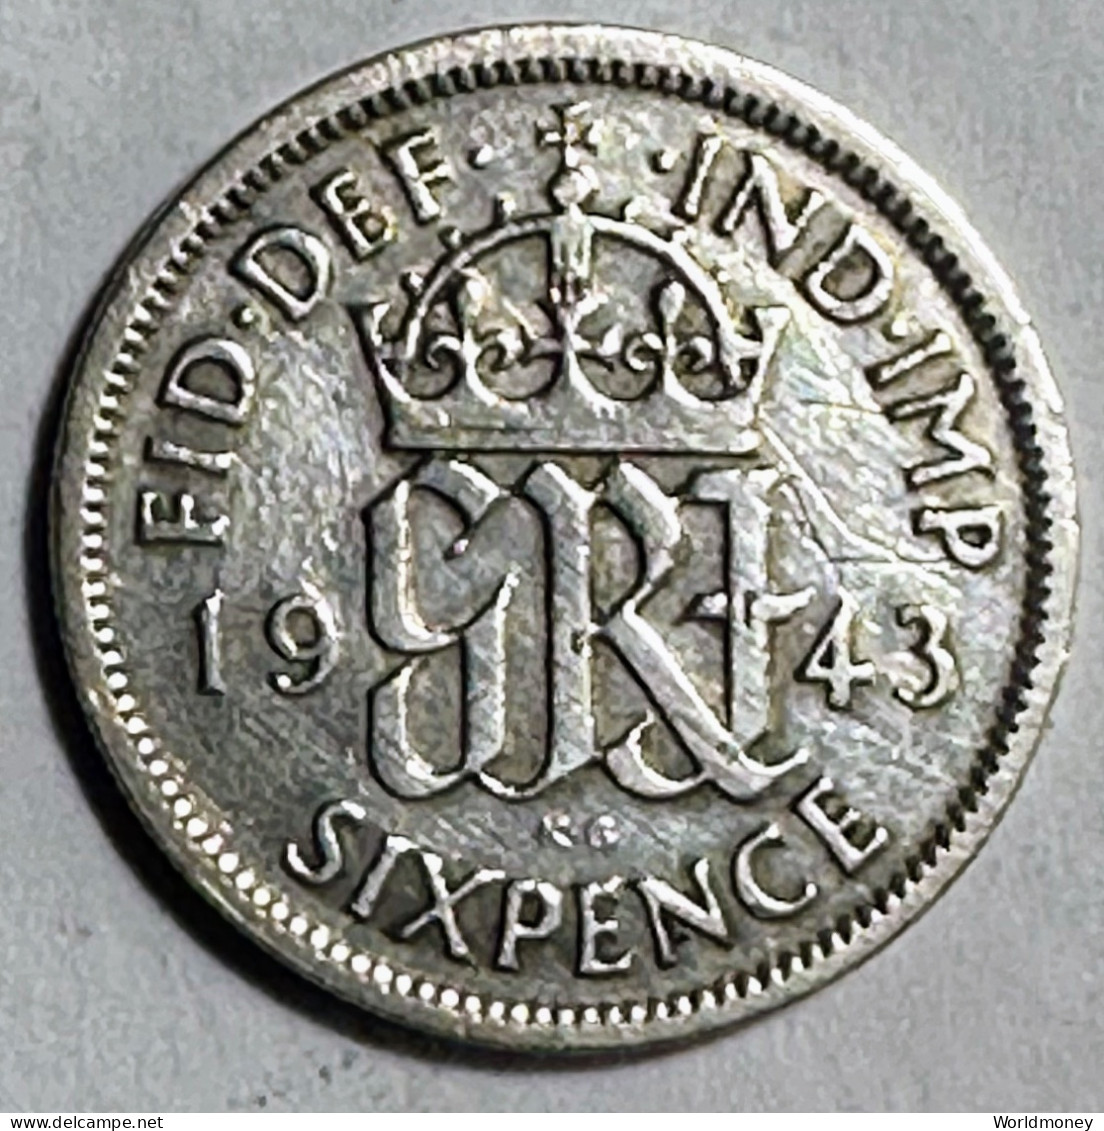 United Kingdom 6 Pence 1943 (Silver) - H. 6 Pence